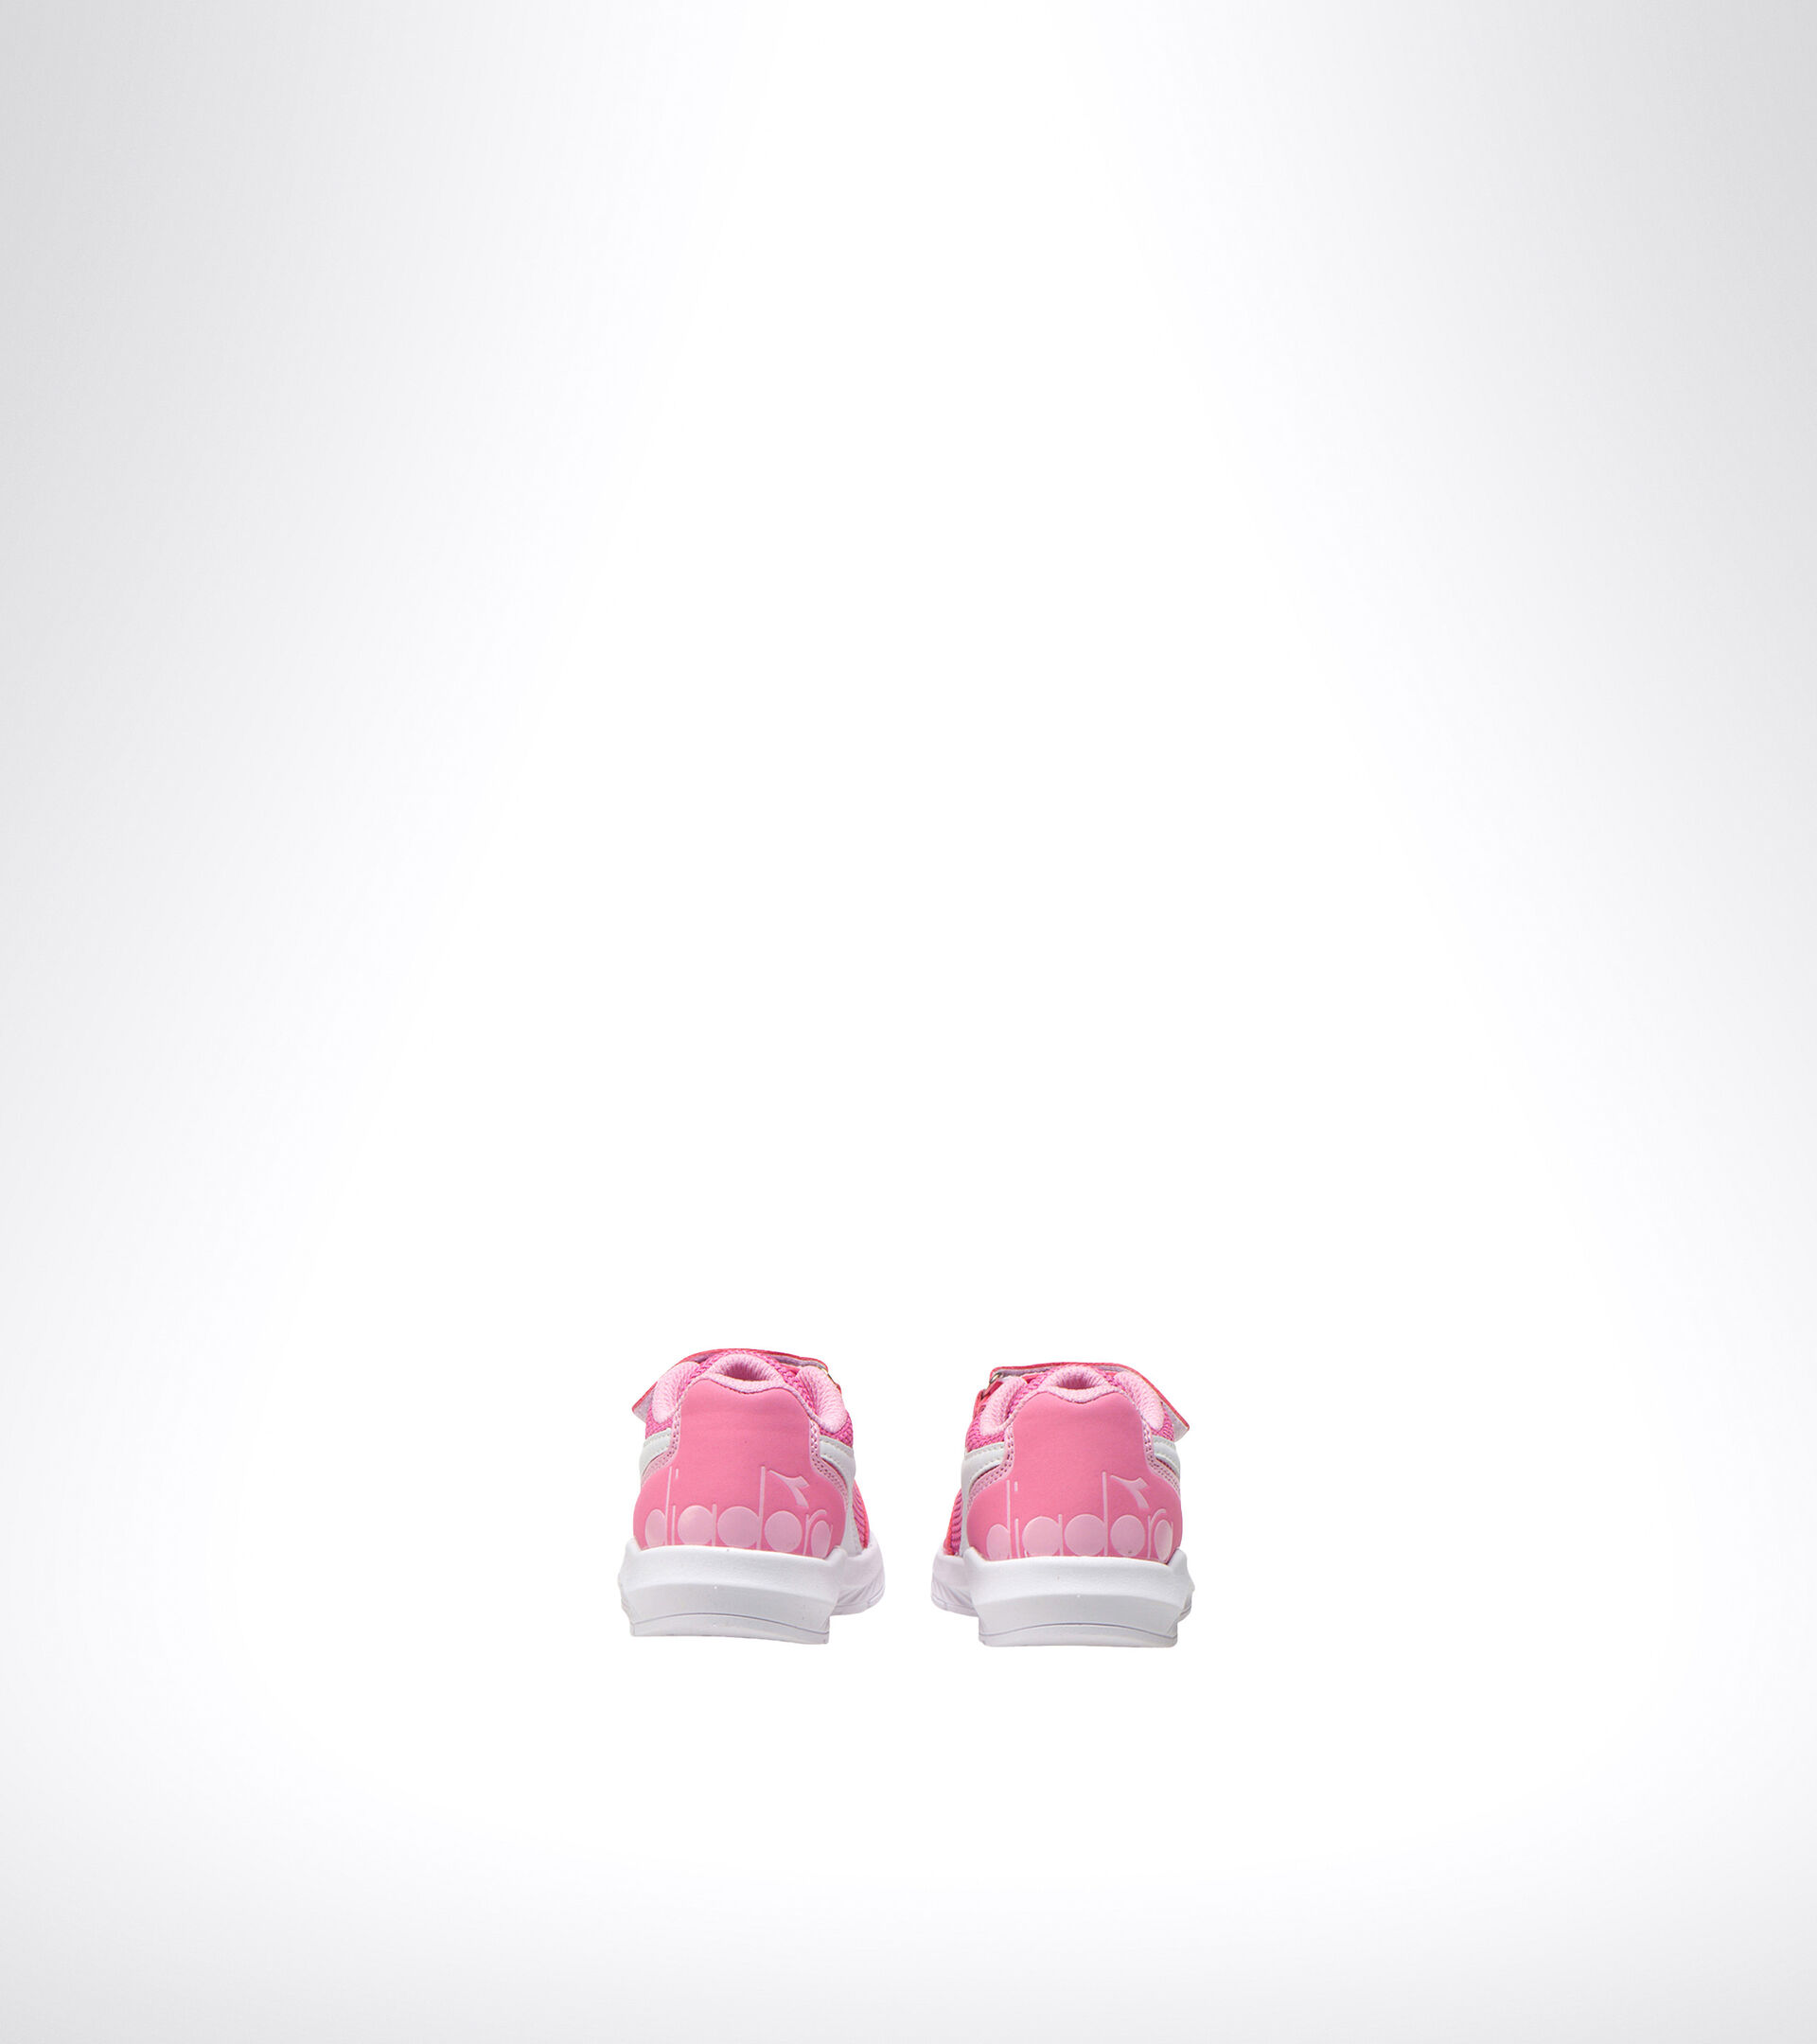 Chaussures de running - Unisexe enfant FALCON I ORCHIDEE SAUVAGE/LILAS SACHET - Diadora